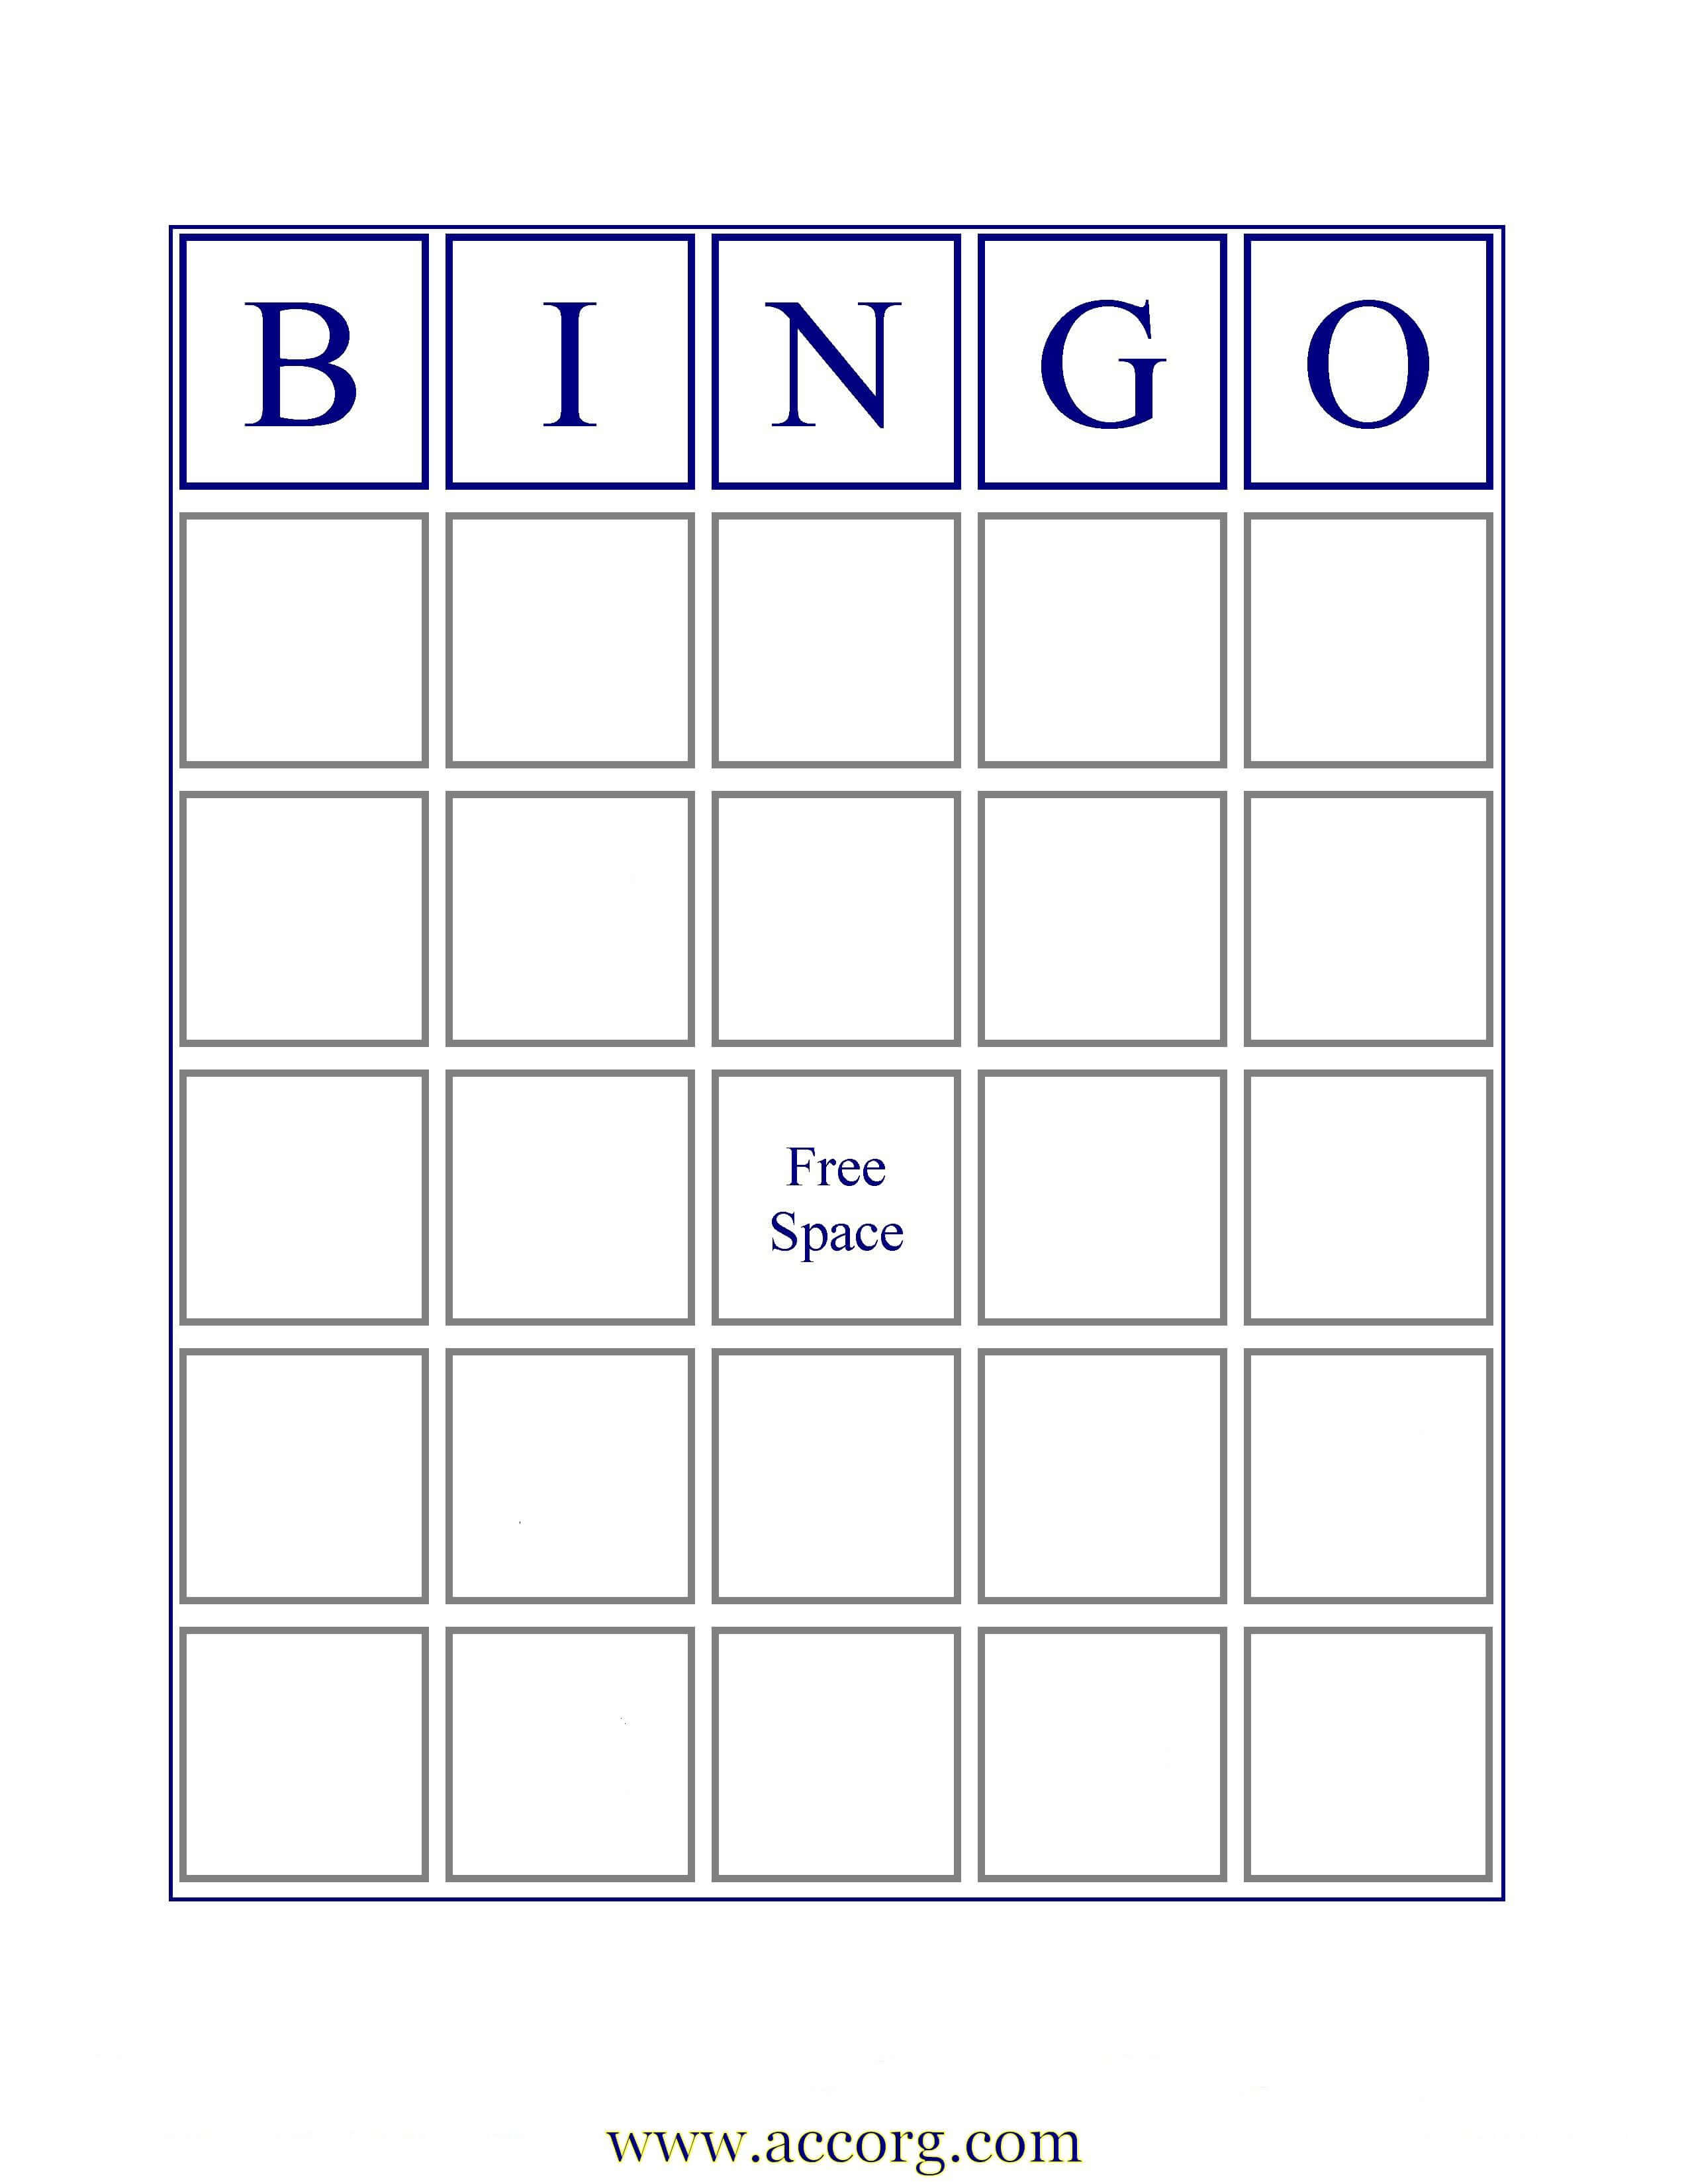 Blank Bingo Cards | If You Want An Image Of A Standard Bingo In Blank Bingo Template Pdf